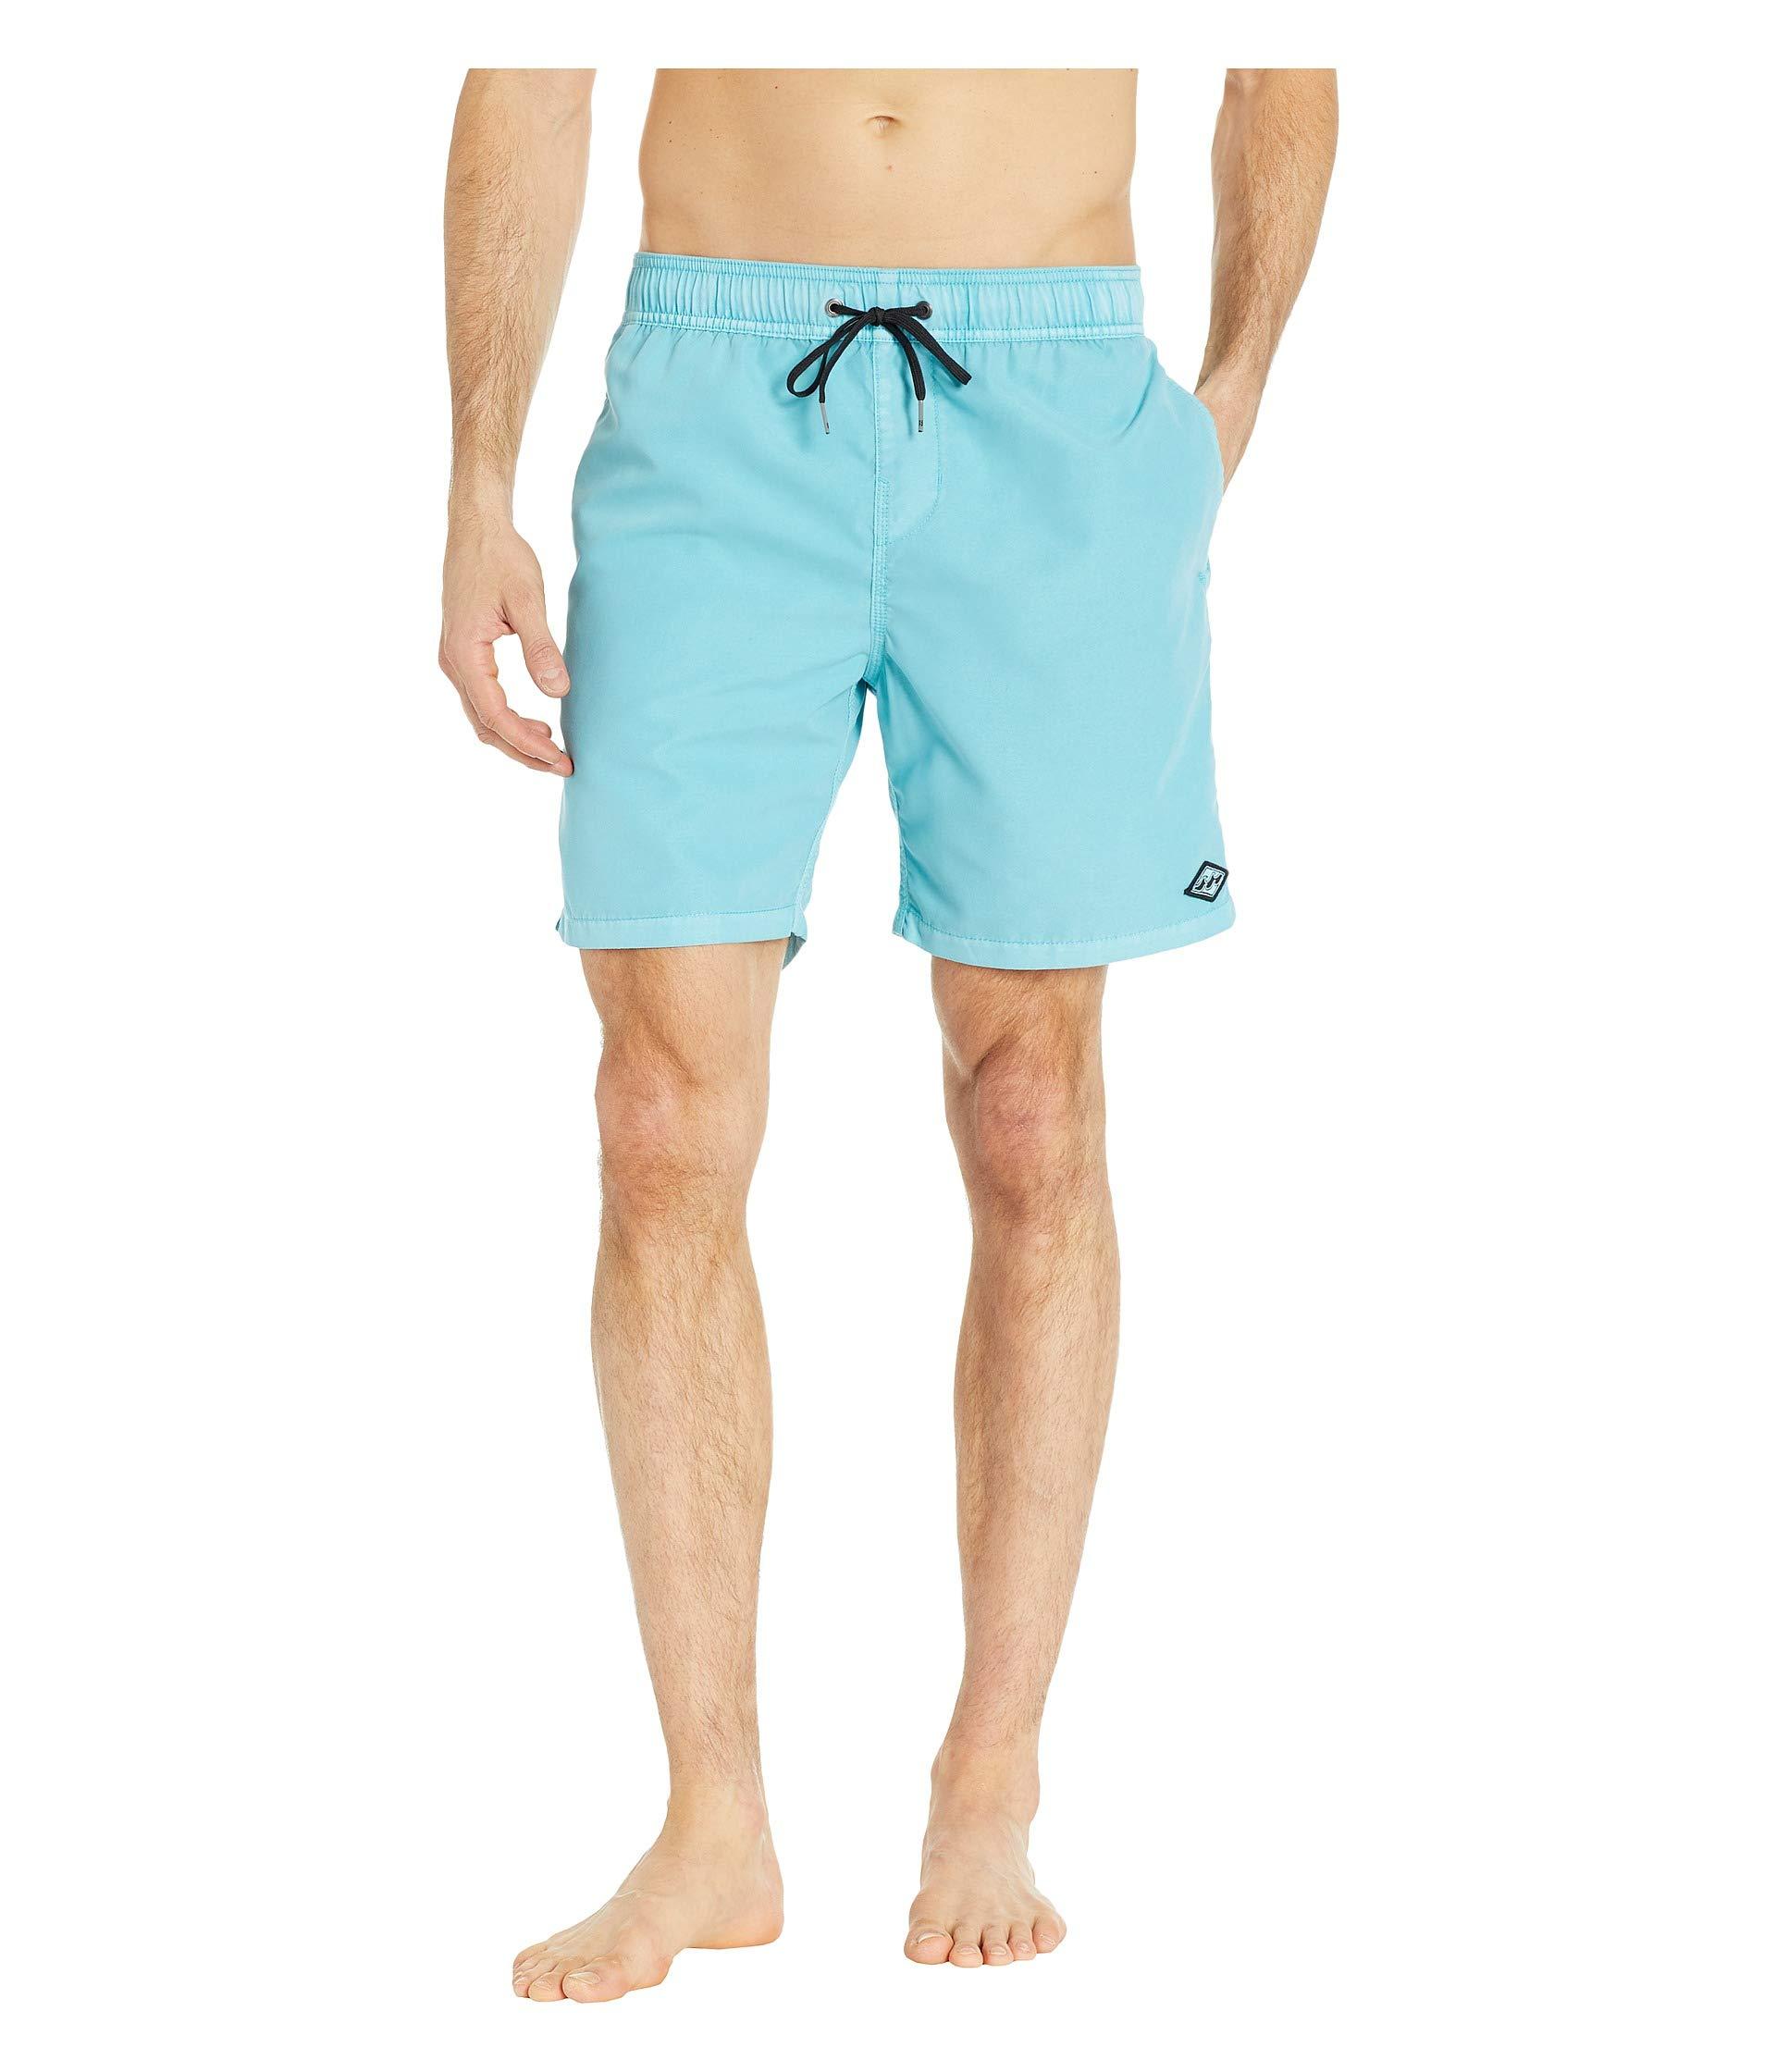 Lyst - Billabong All Day Layback 18 (aqua) Men's Swimwear in Blue for Men